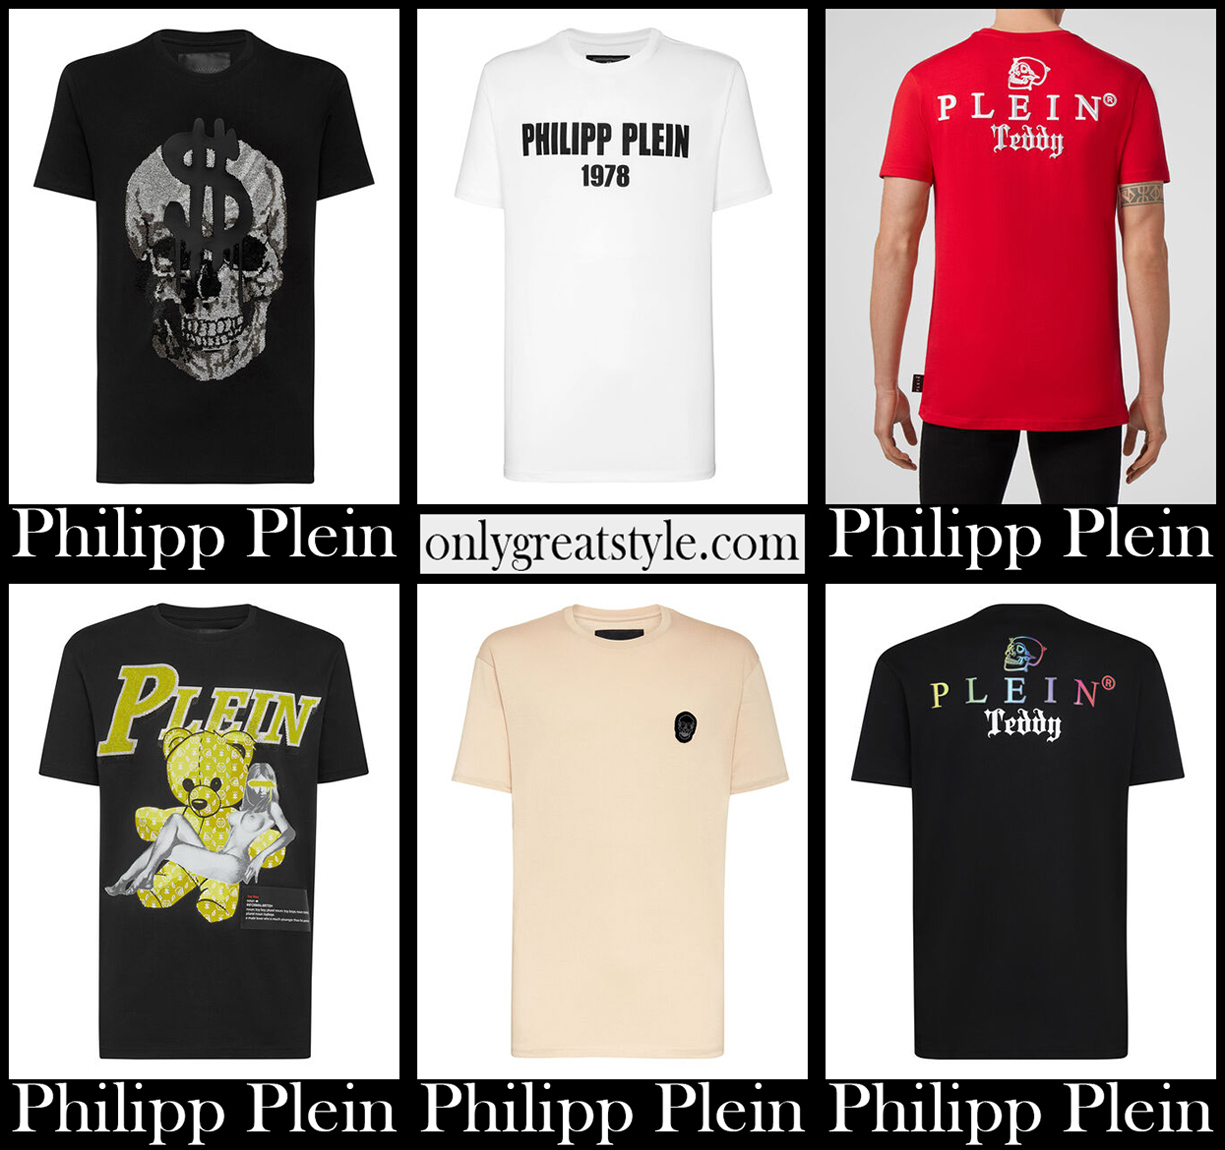 Philipp Plein t shirts 2021 new arrivals mens fashion clothing